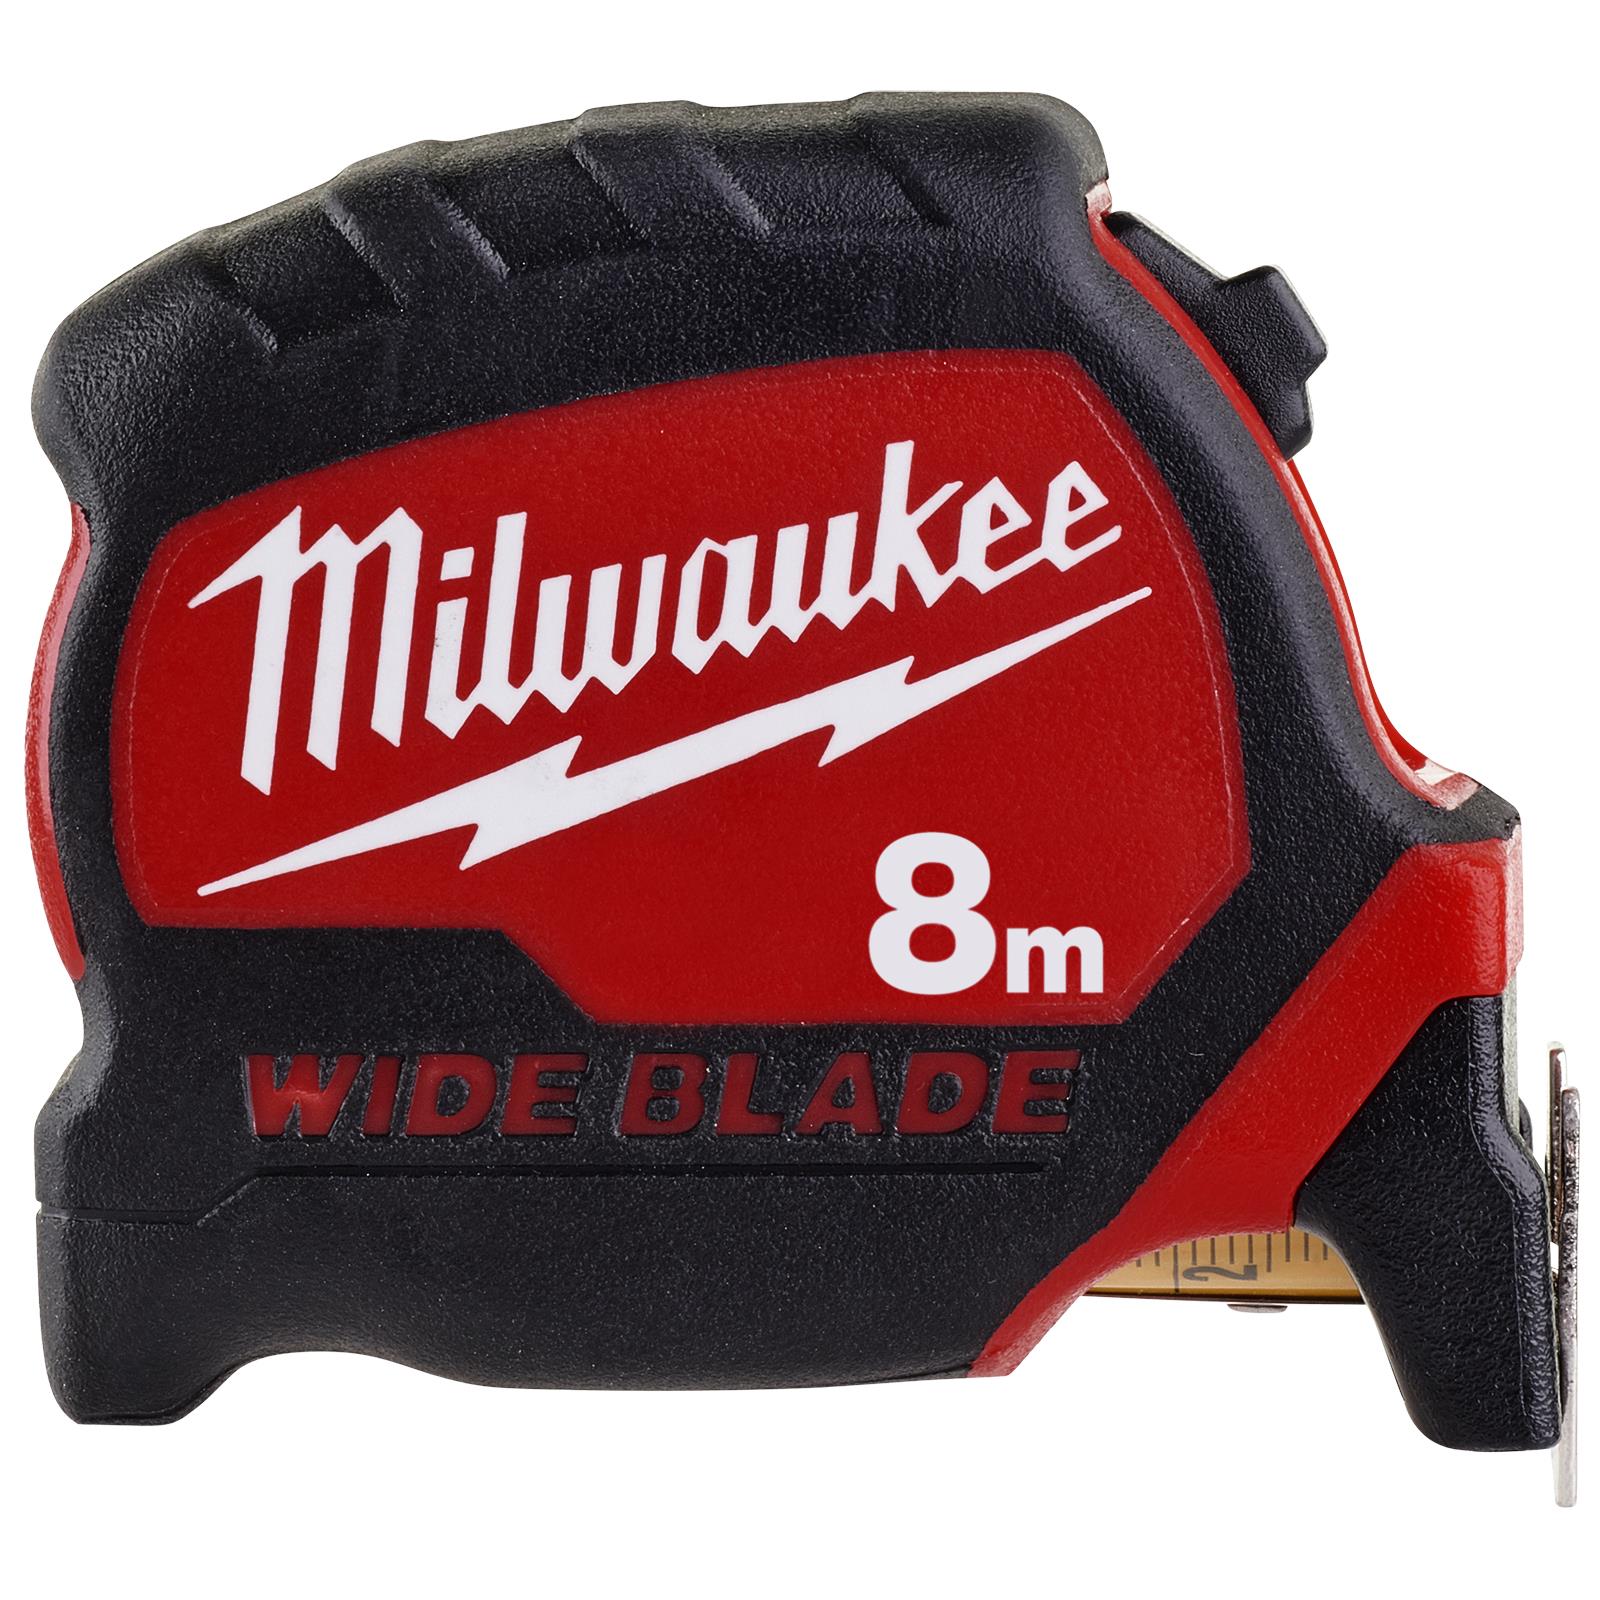 Milwaukee Tape Measure 8m Premium Wide Blade 33mm Metric